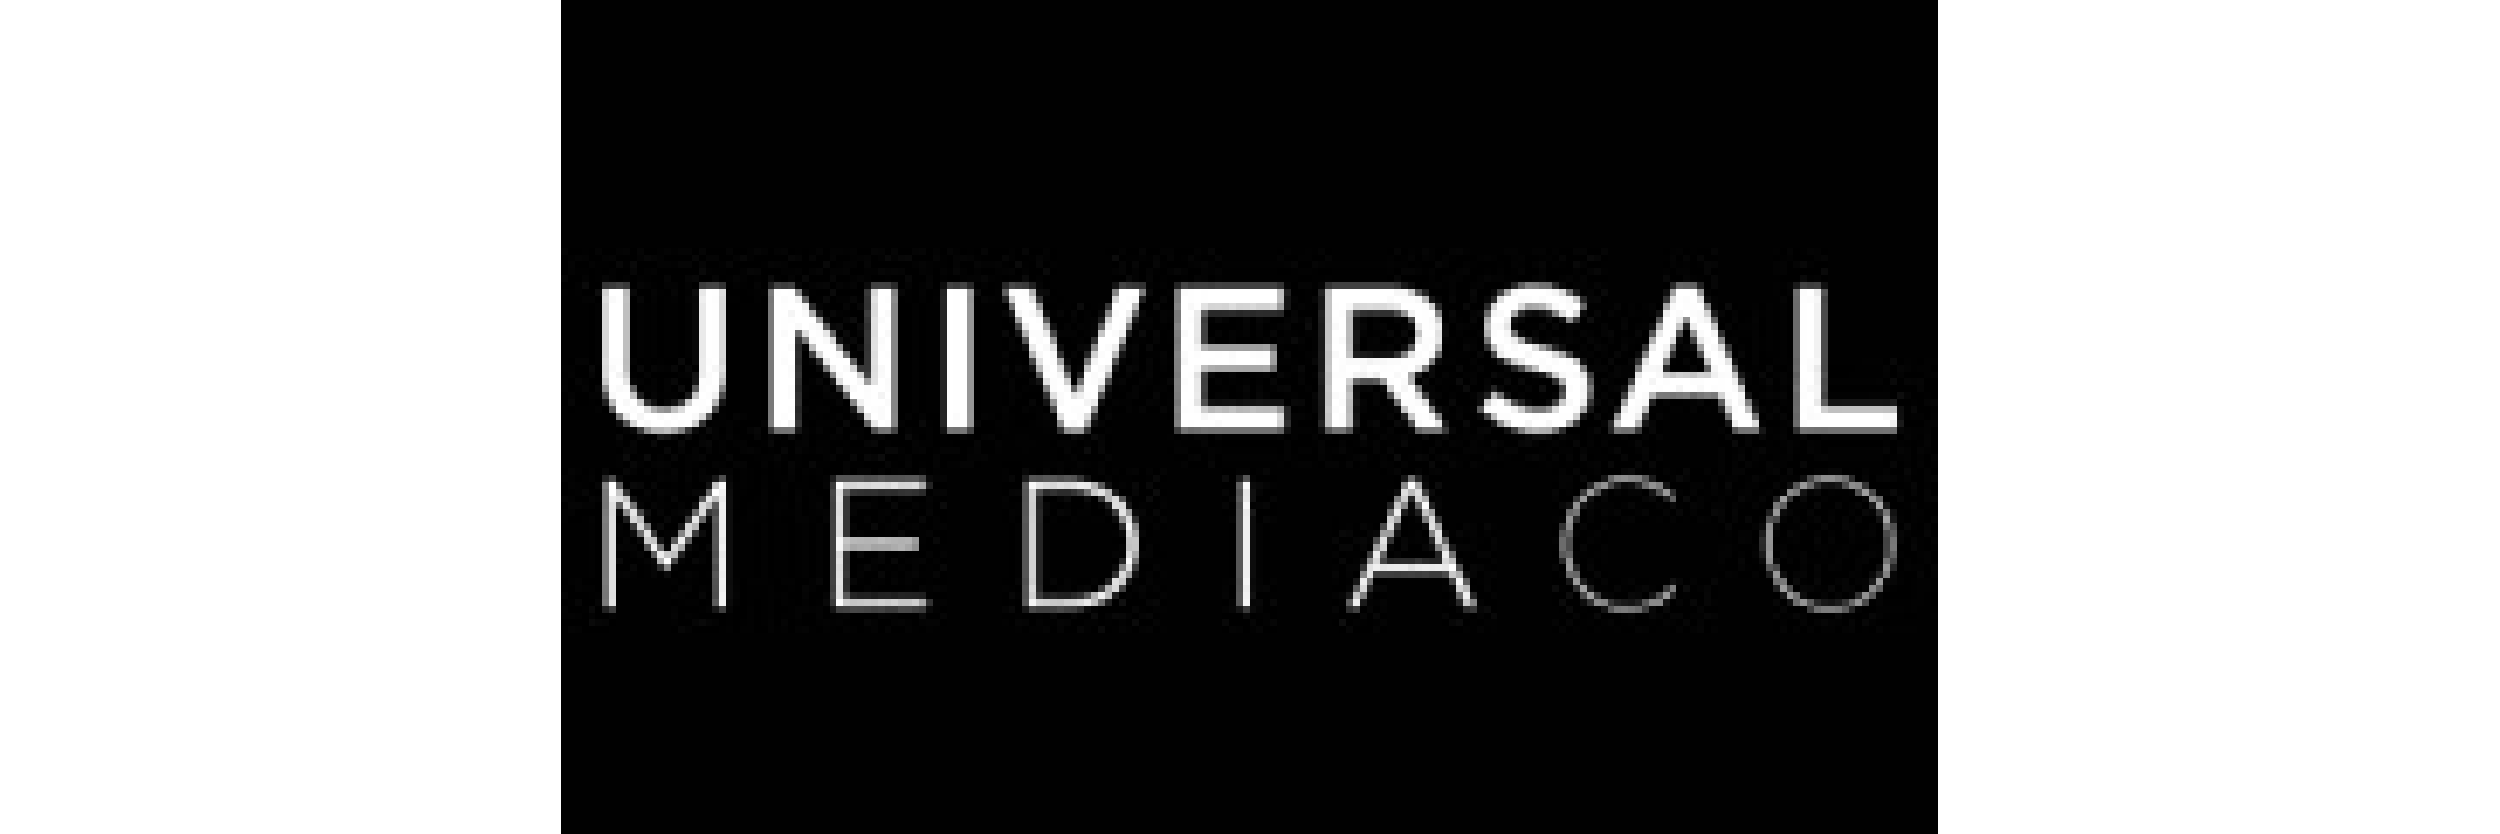 Universal Media logo